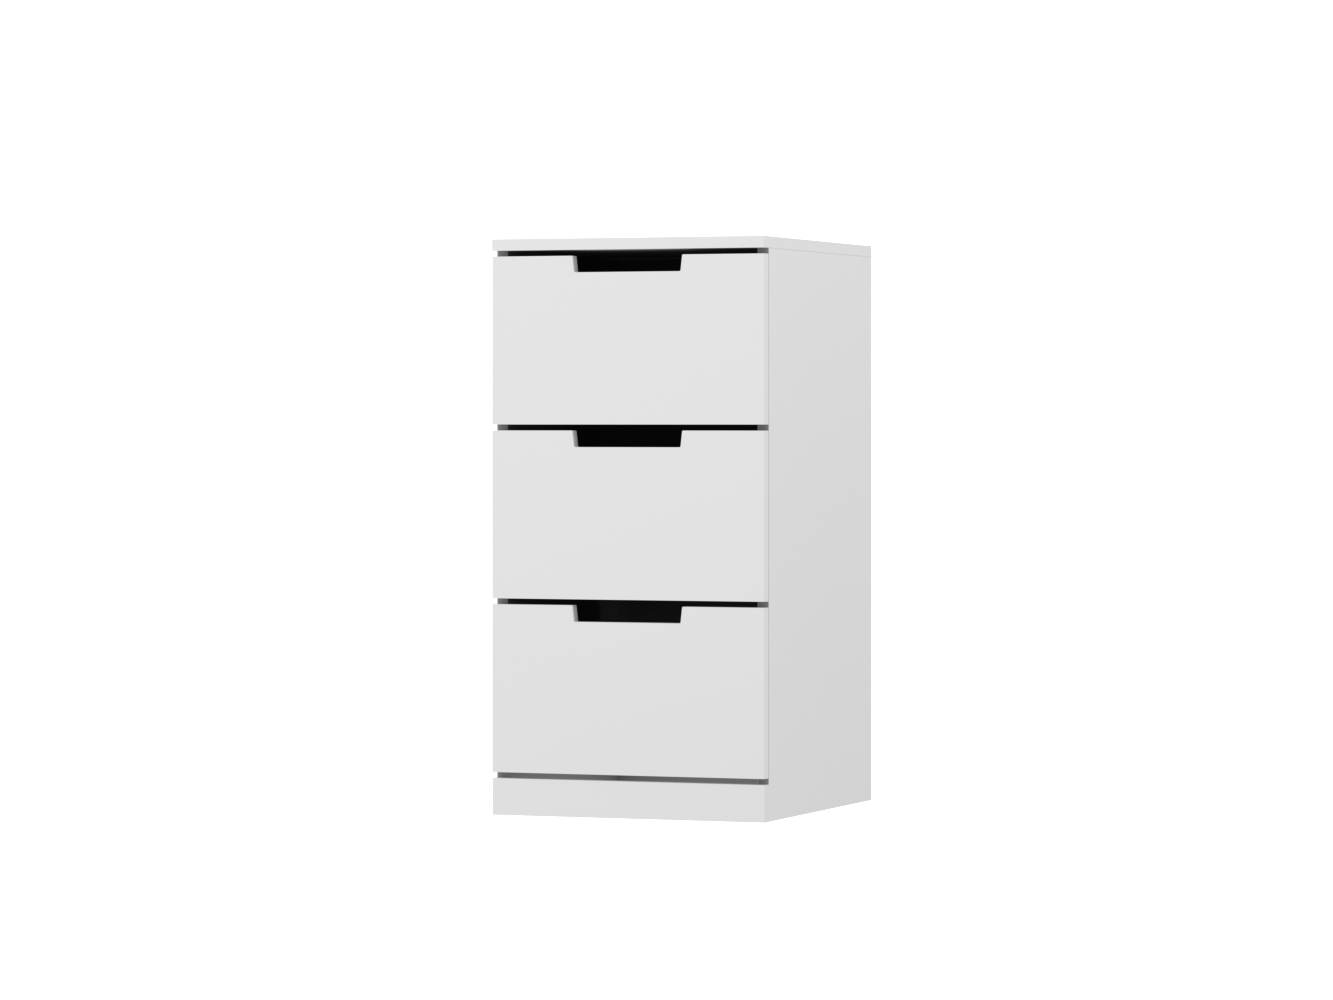 Изображение товара Комод Нордли 26 white ИКЕА (IKEA), 40x45x76 см на сайте adeta.ru